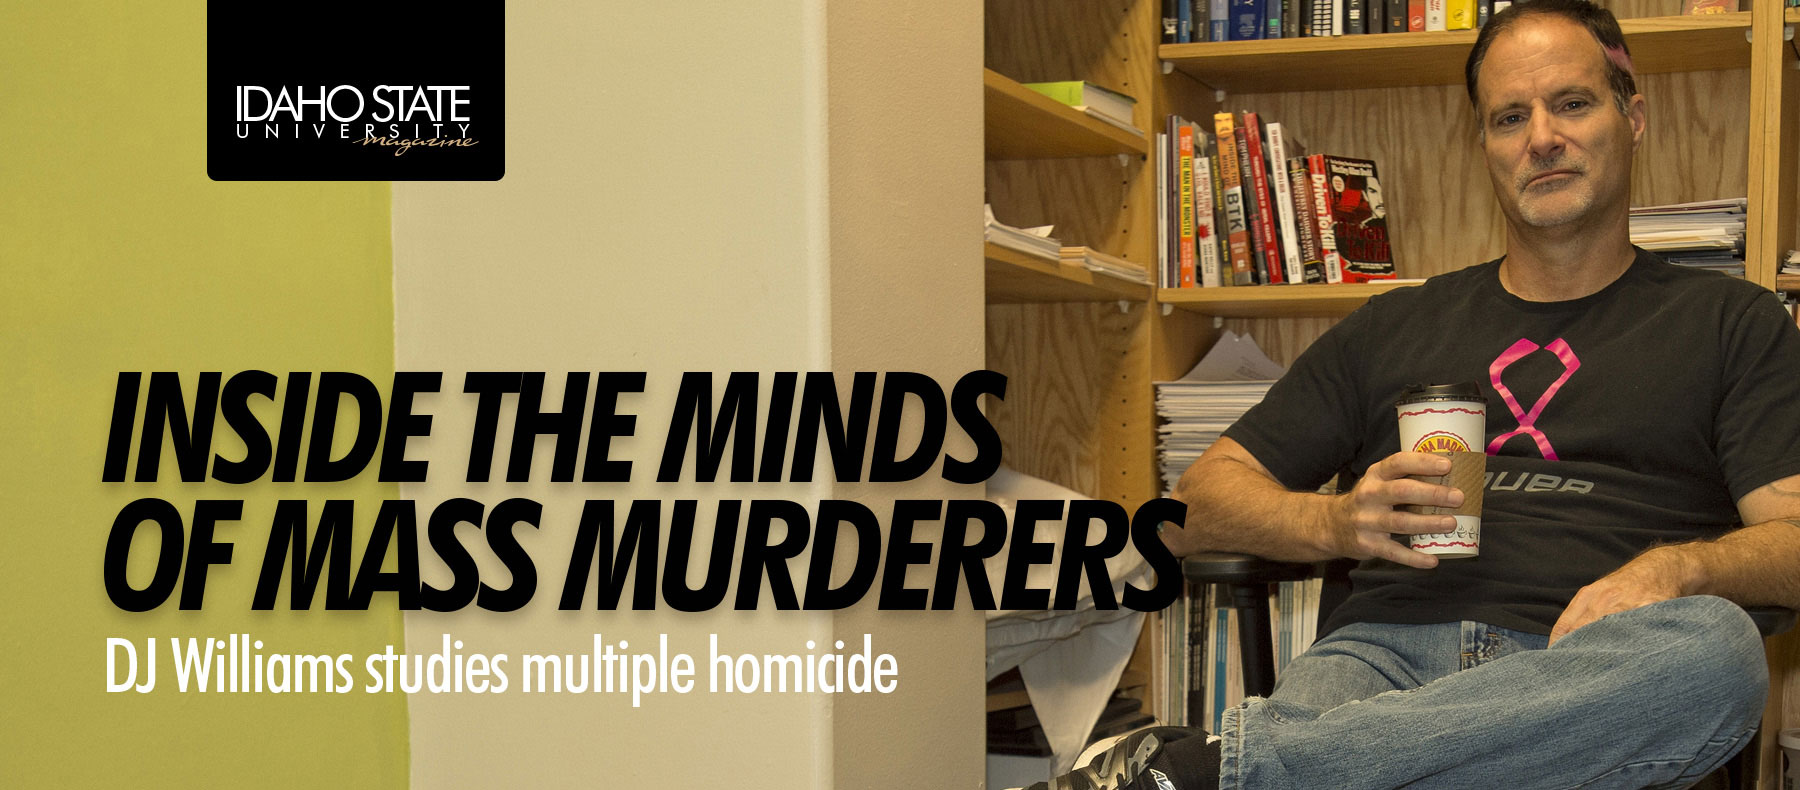 Inside the minds of mass murderers. Dj Williams studies multiple homicide.